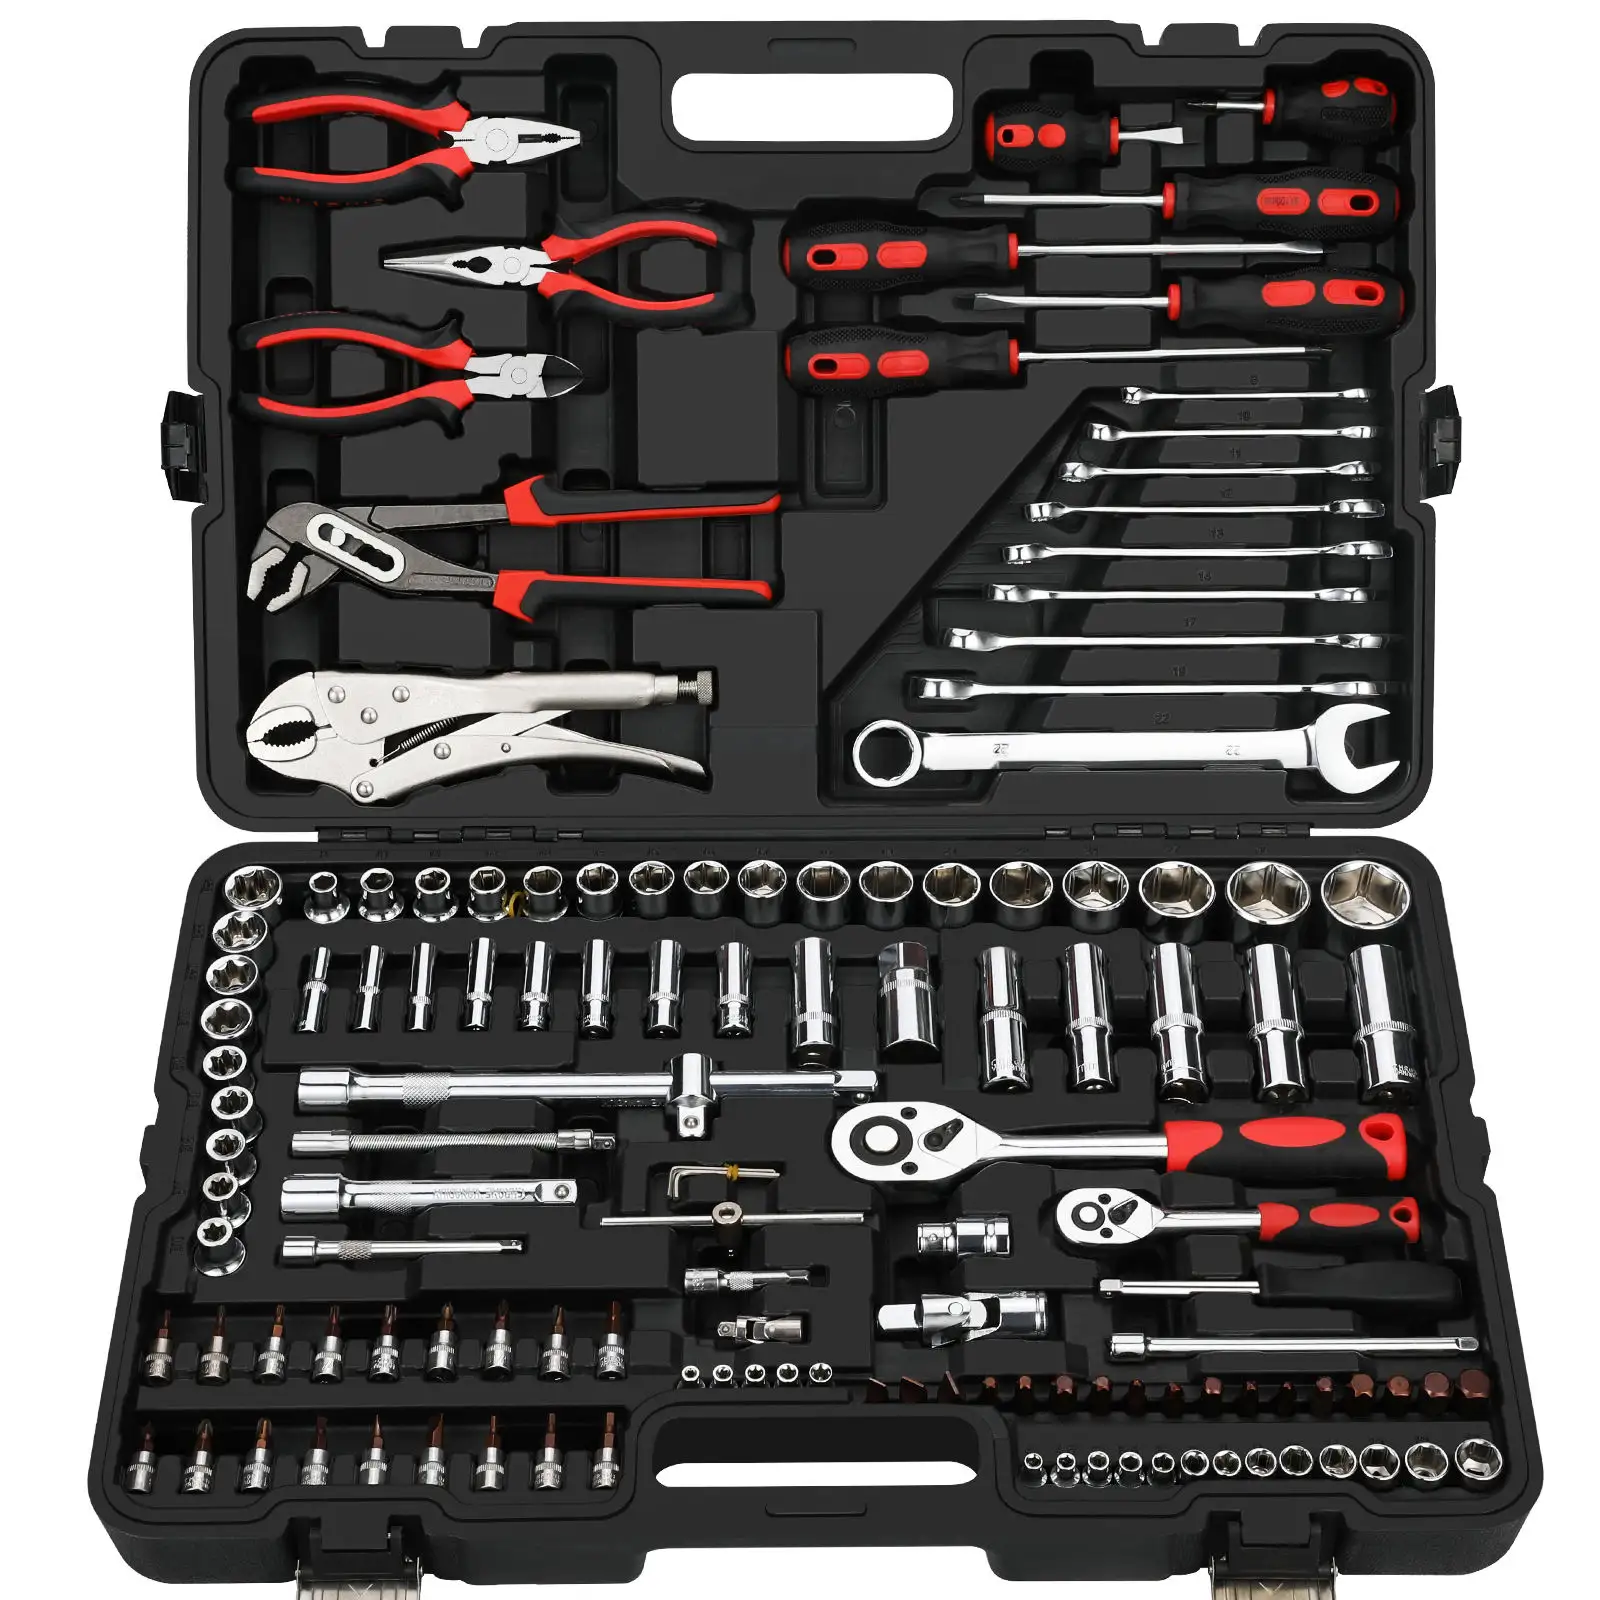 131-piece ratchet wrench socket tool set, automotive repair and maintenance tool kit